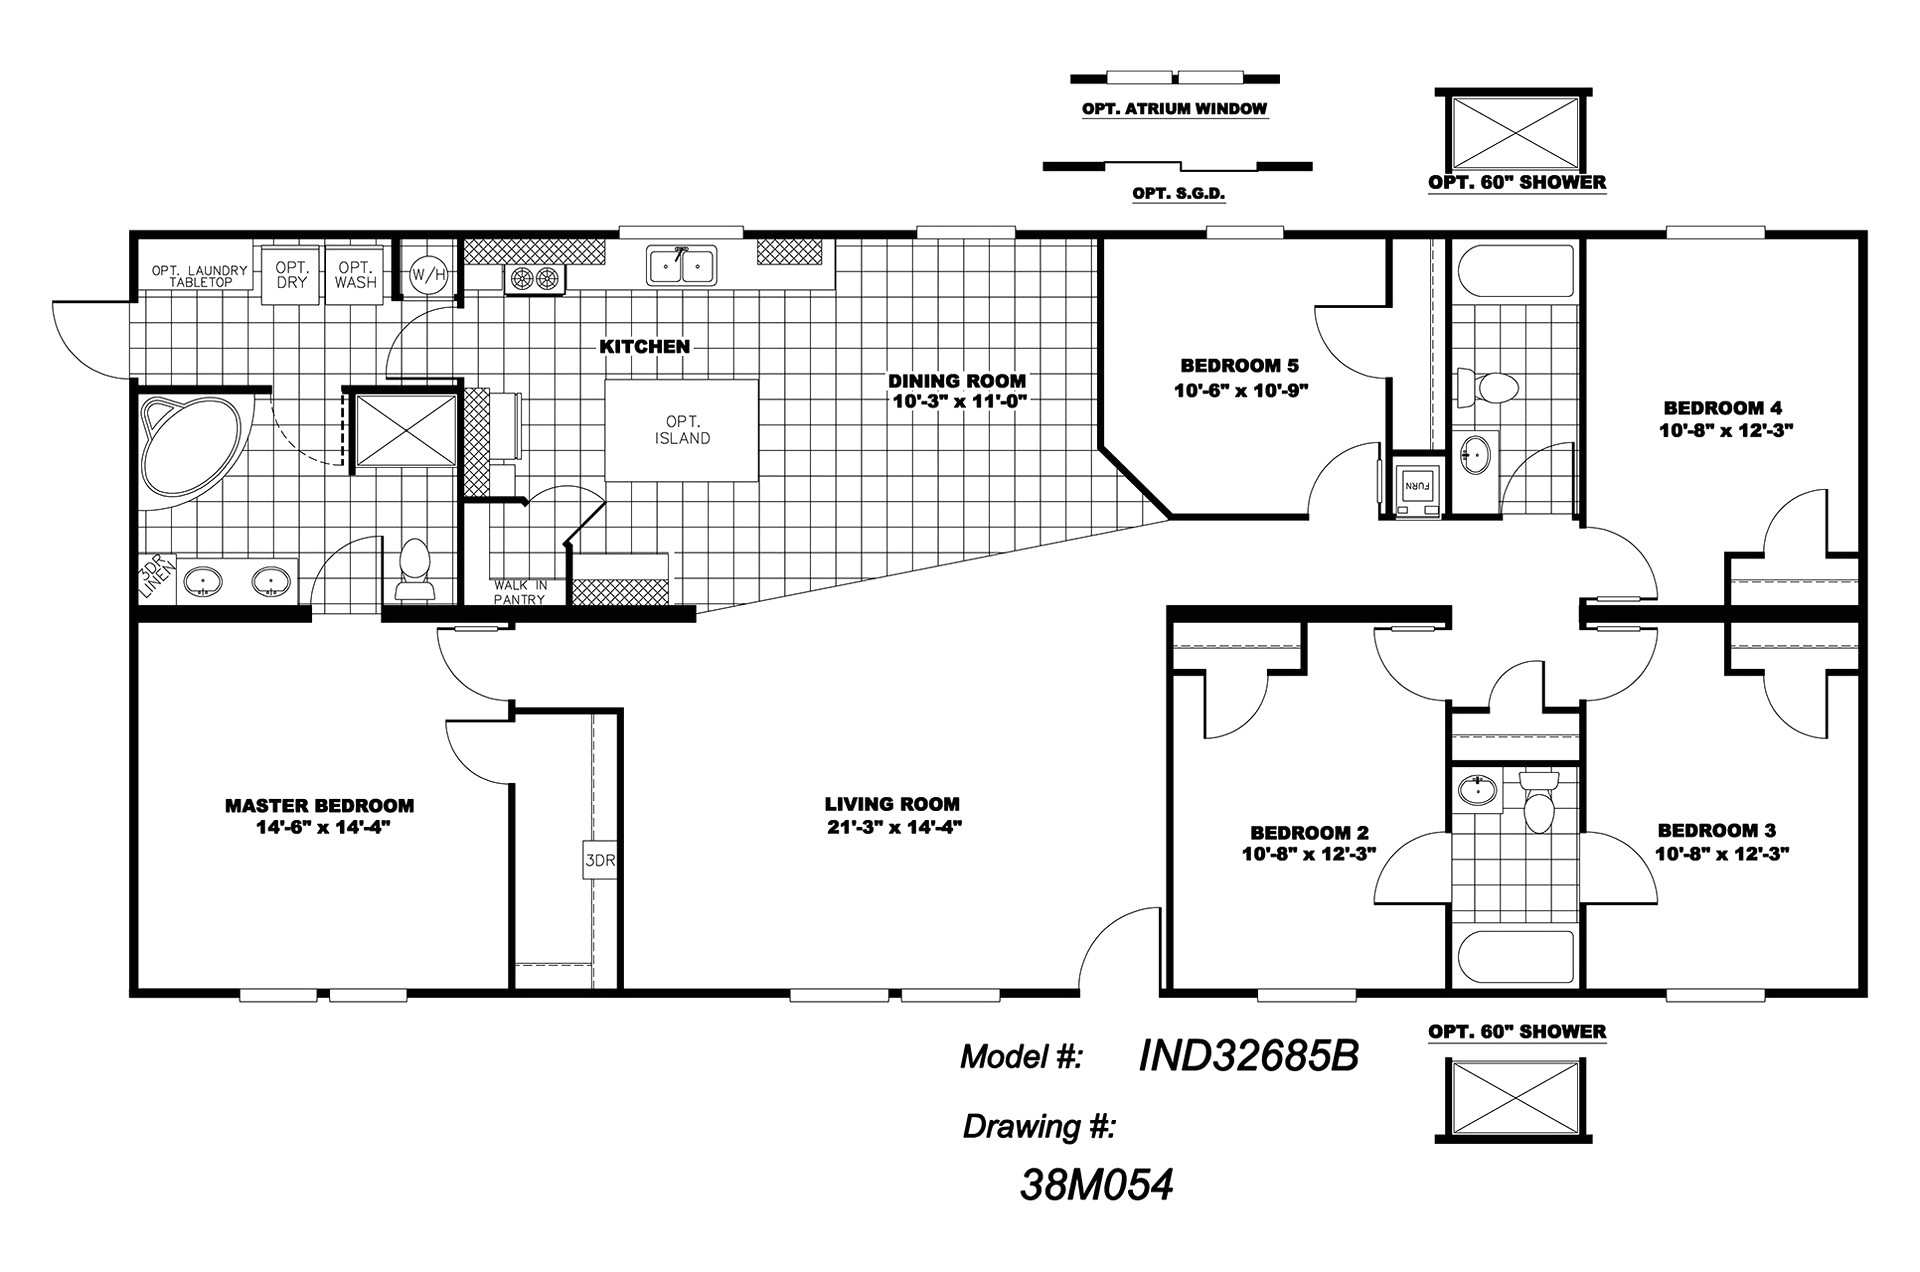 2001 Redman Mobile Home Floor Plans